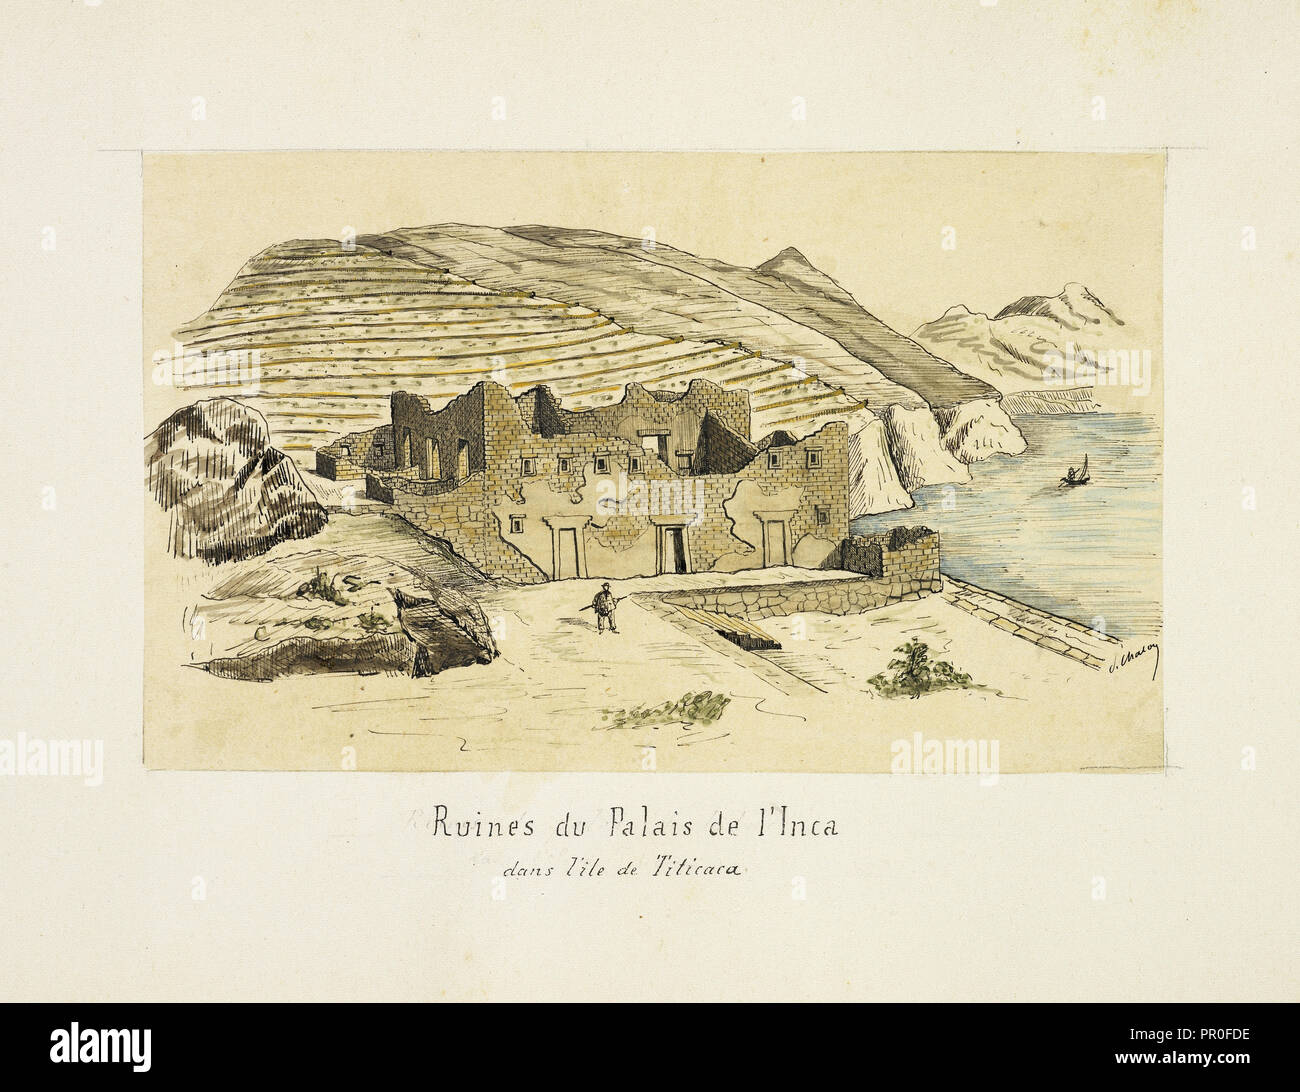 Ruines du Palais de l'Inca, Views of Inca and pre-Inca sites, Chalon, Paul Fédéric, 1846-1919, Lithography, 1872-1880, Album Stock Photo